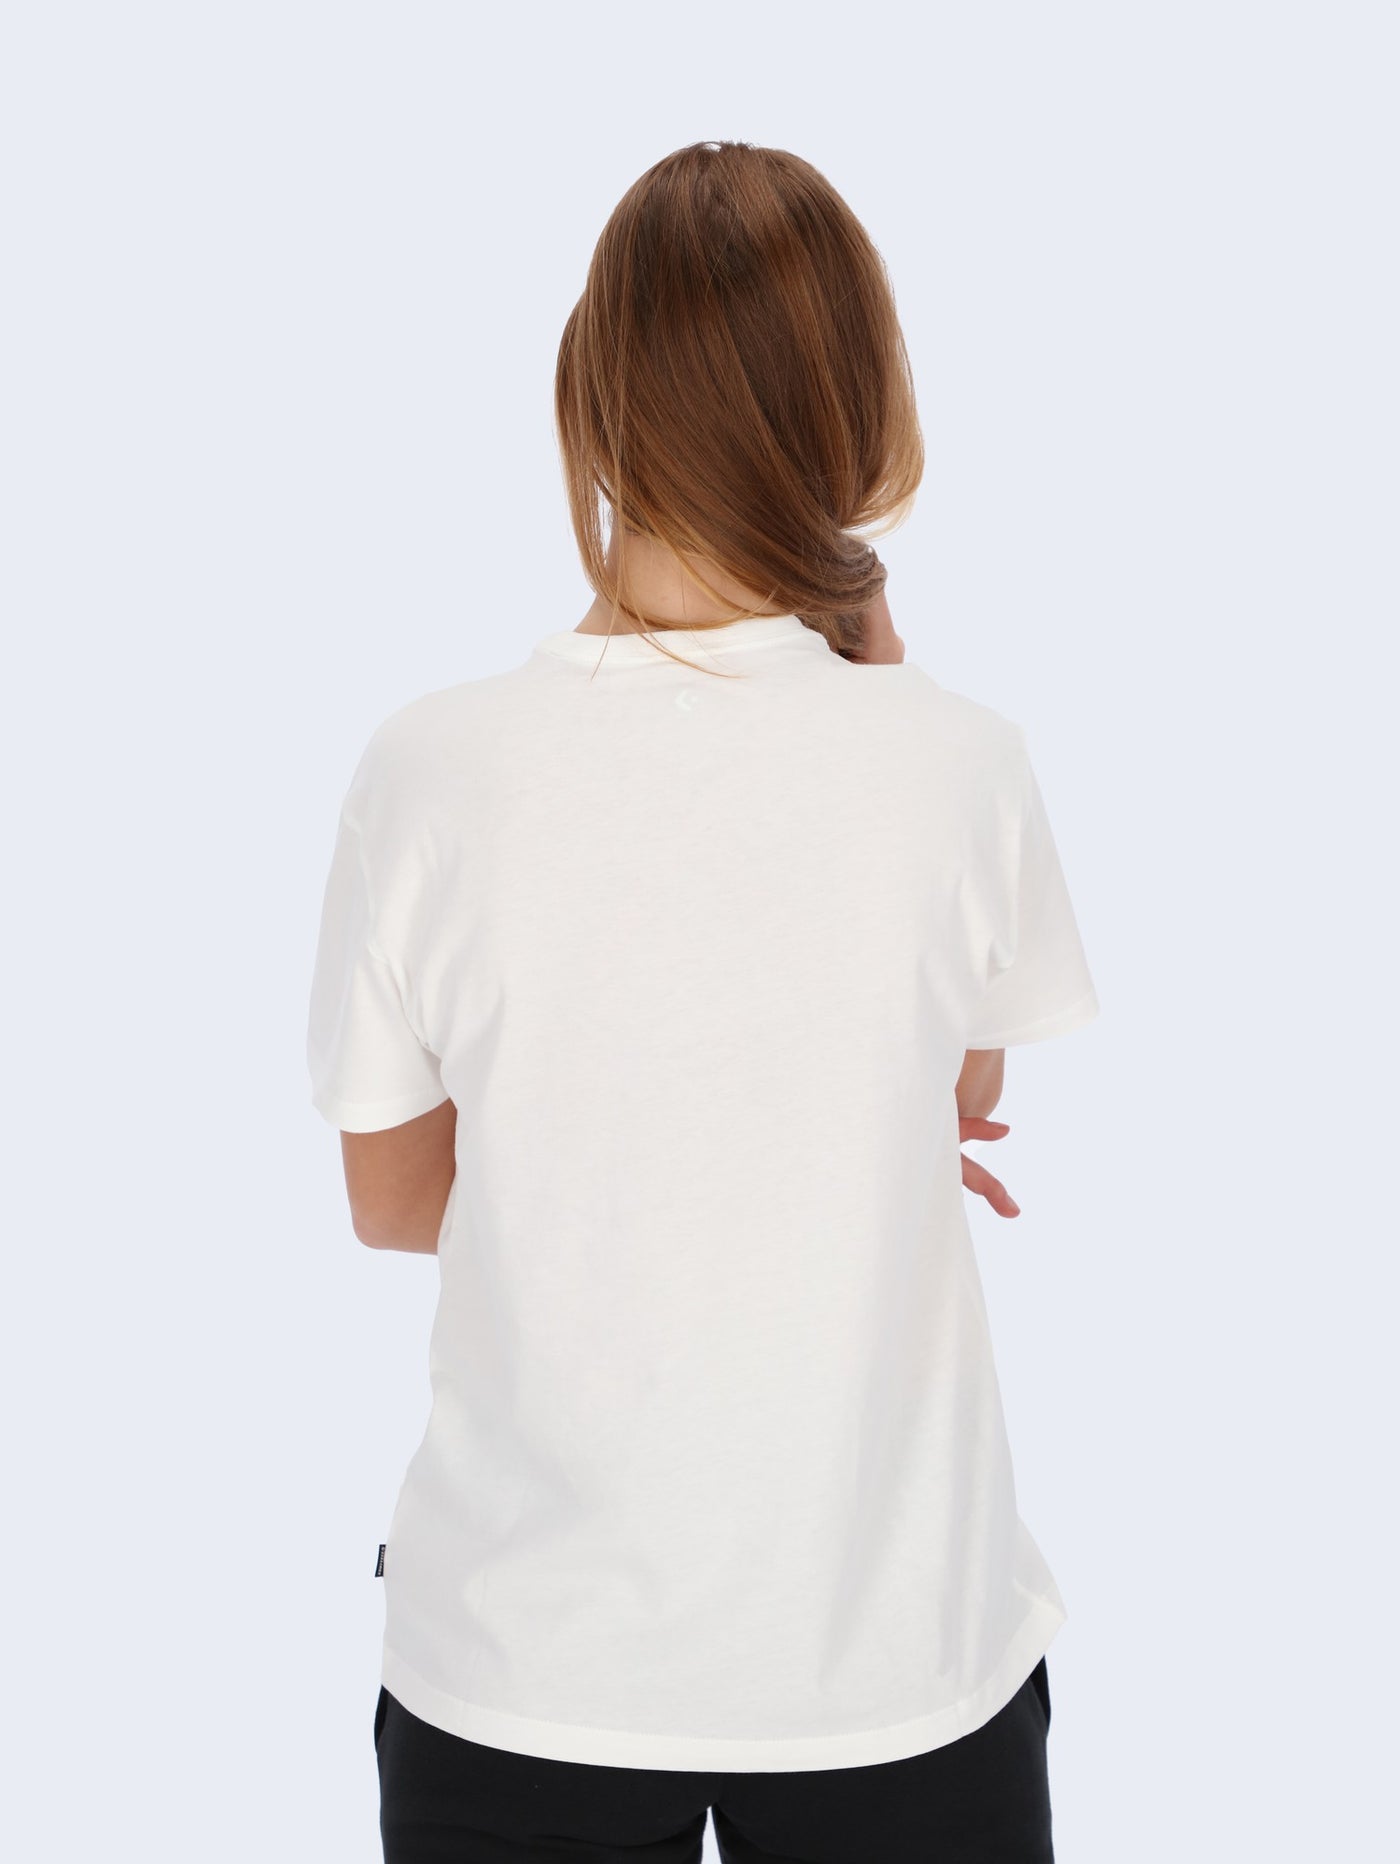 Converse Unisex Rivarly T-Shirt - 10020520-A01